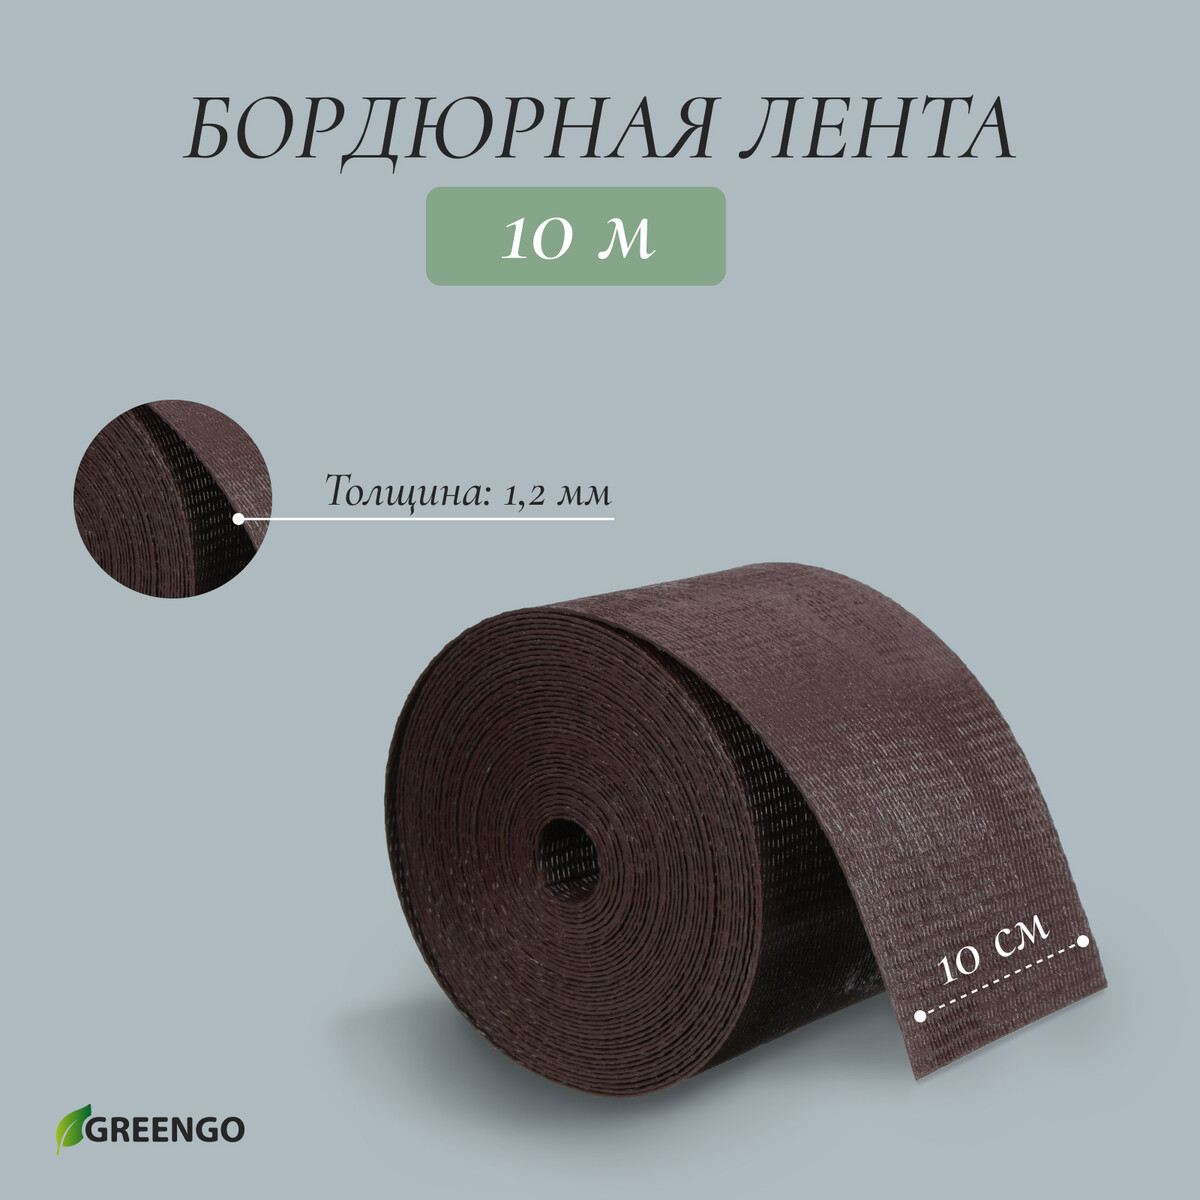 Лента бордюрная, 0.1 × 10 м, толщина 1.2 мм, пластиковая, коричневая, greengo лента бордюрная 0 15 × 9 м толщина 1 2 мм пластиковая фигурная красная